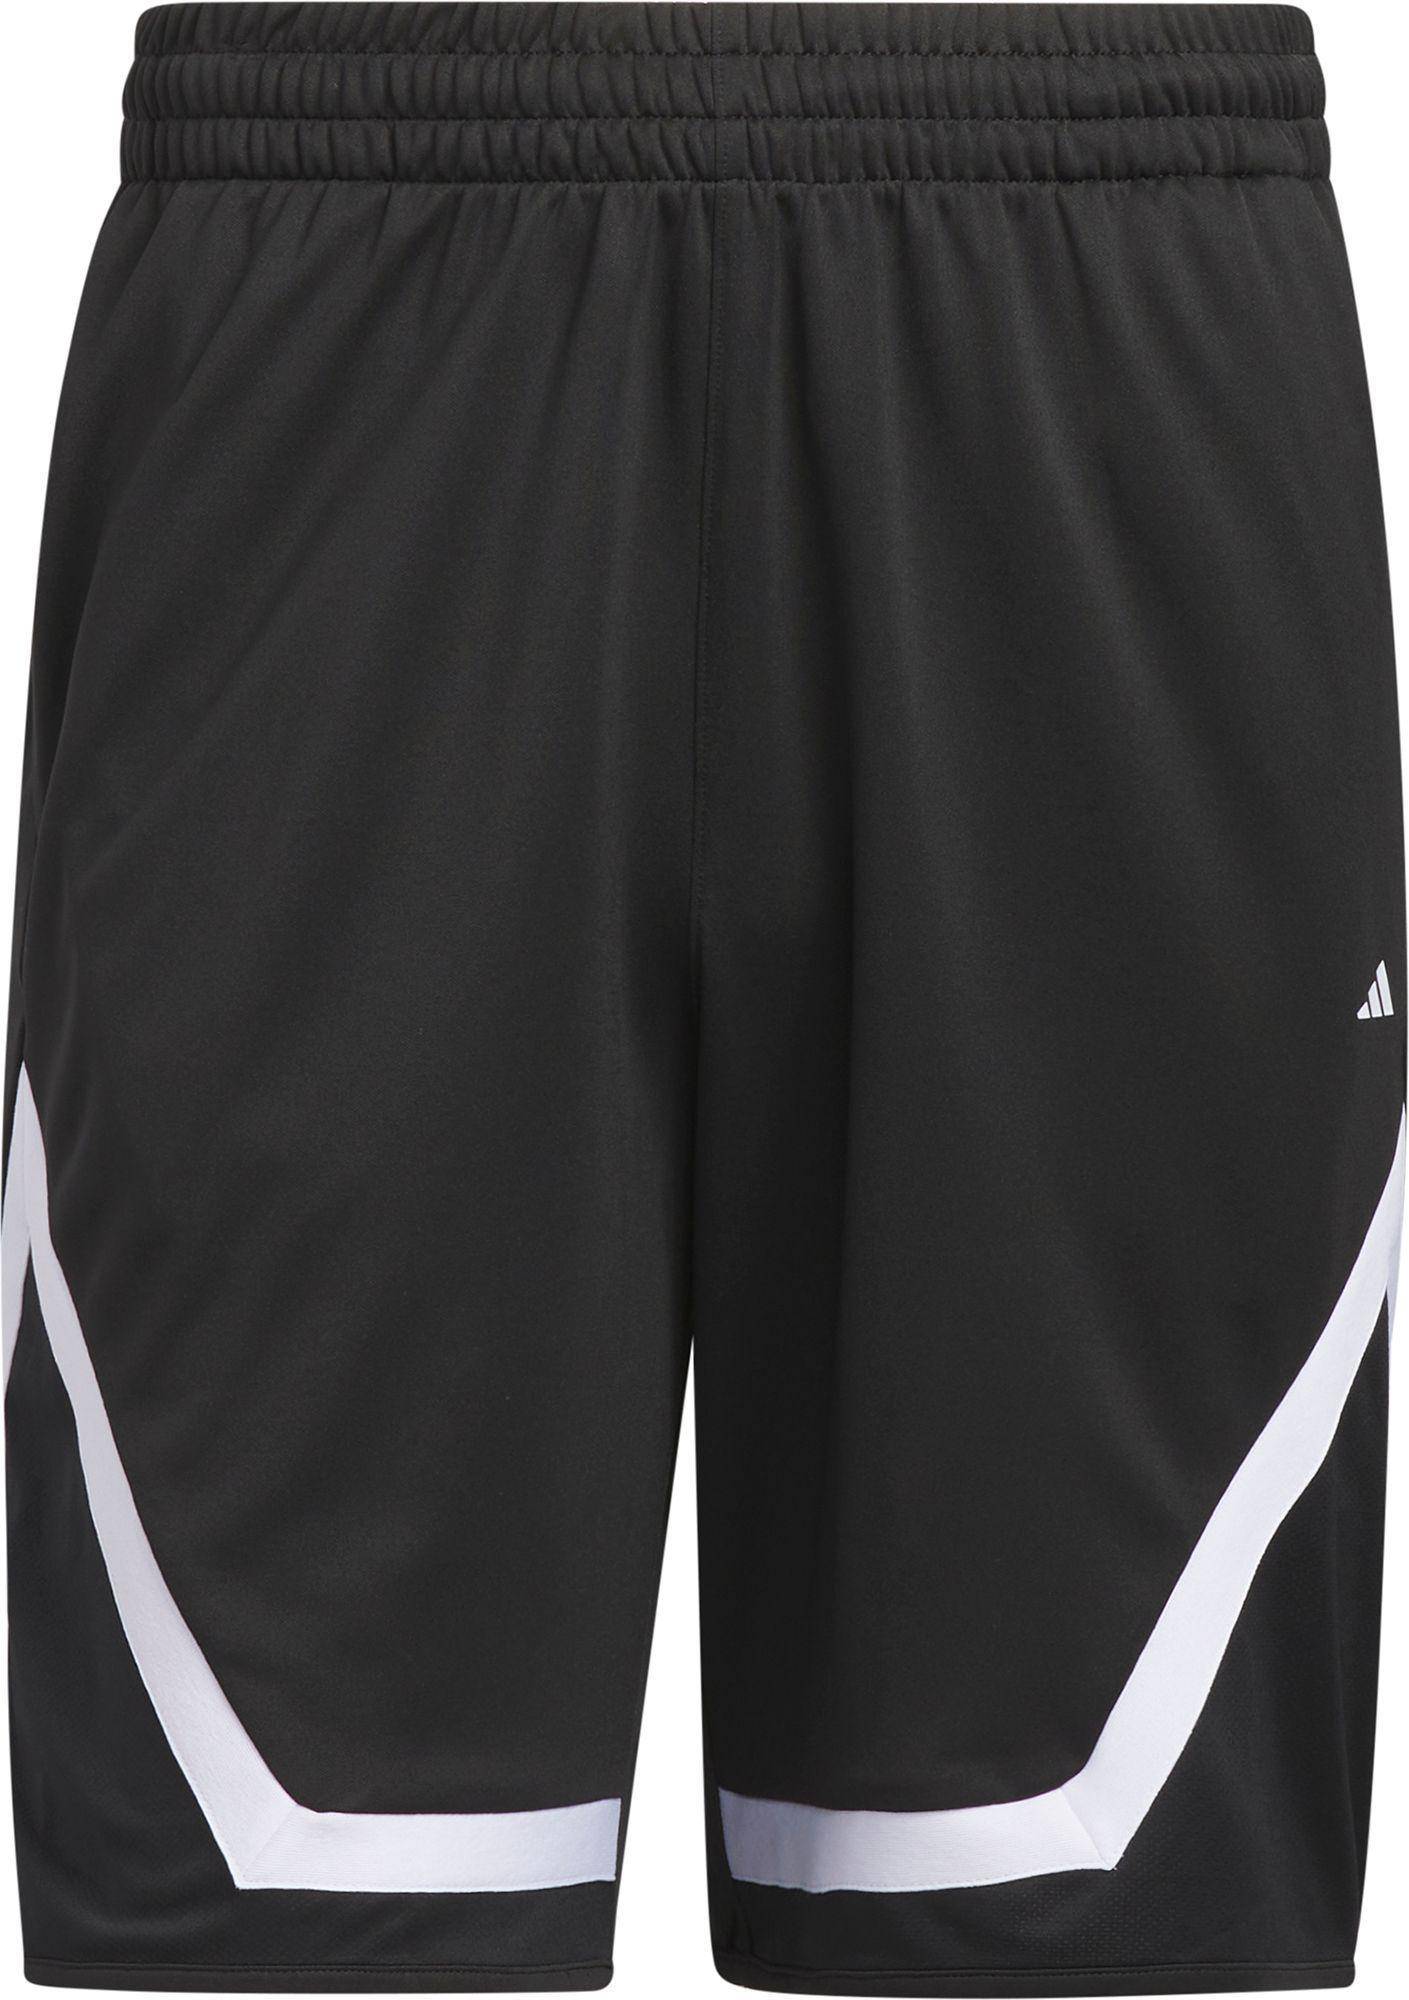 Adidas Pro Block Shorts - Black/White • Prices